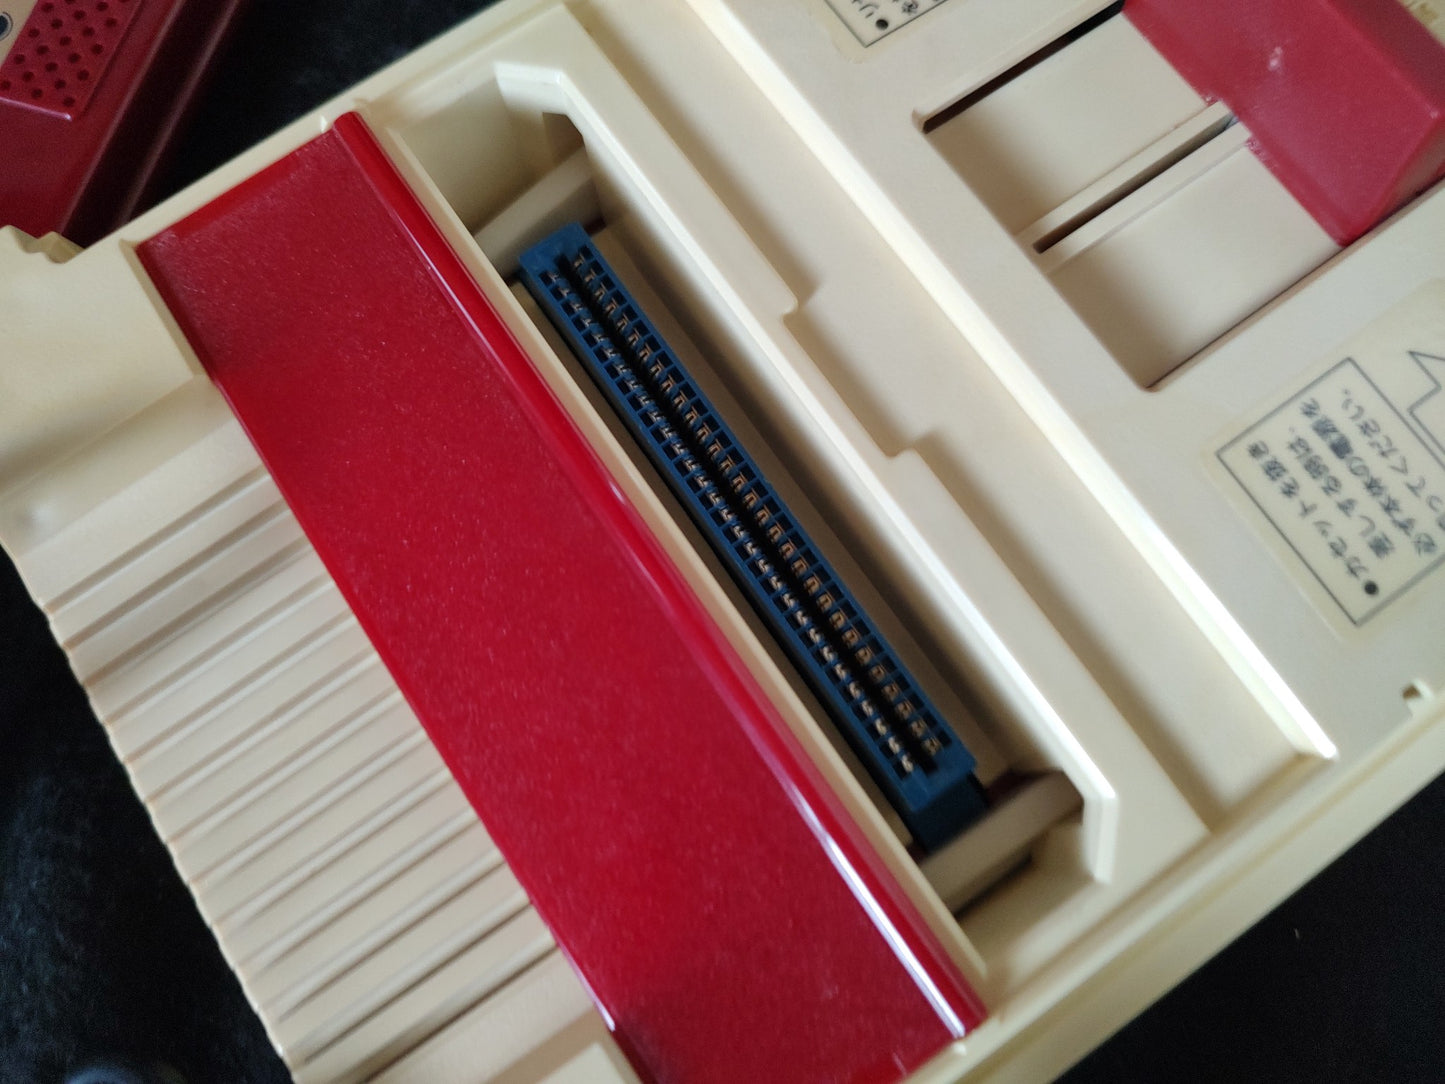 Nintendo Famicom NES HVC-001 Console, PSU, Manual, Flyer, Box set, Working-f0916